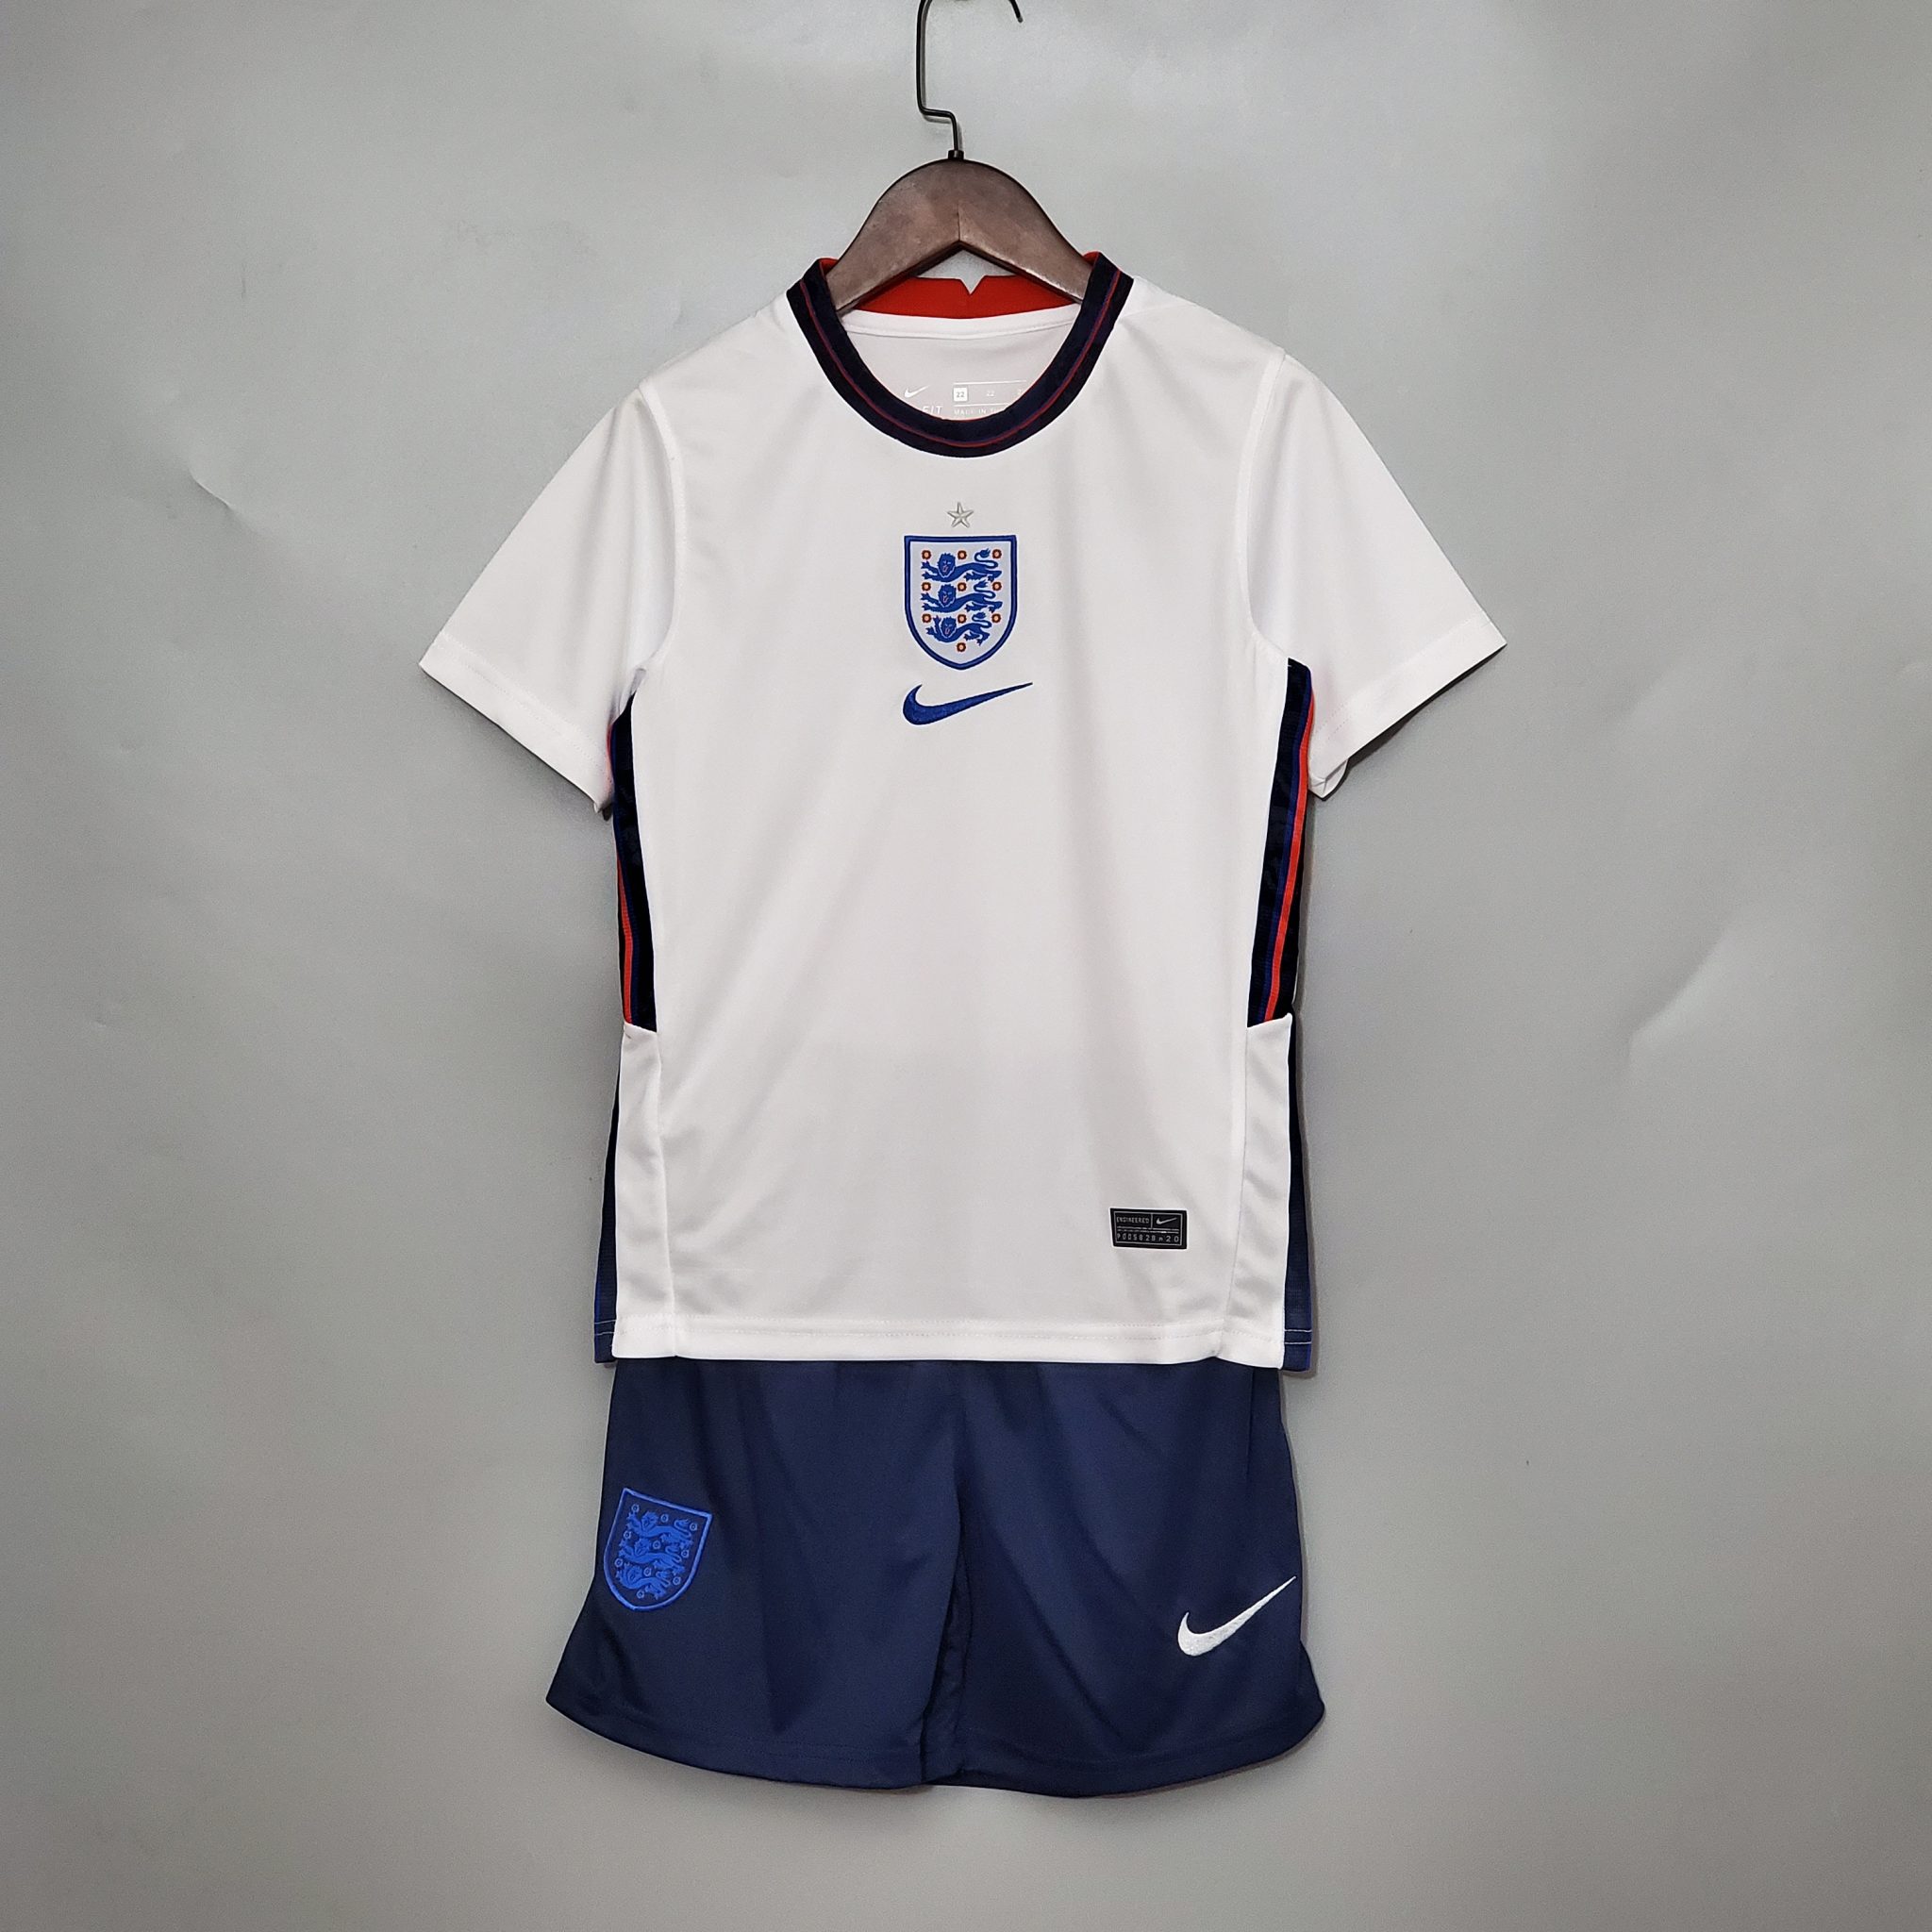 Kids England 2020 Euro Kit - Bargain Football Shirts